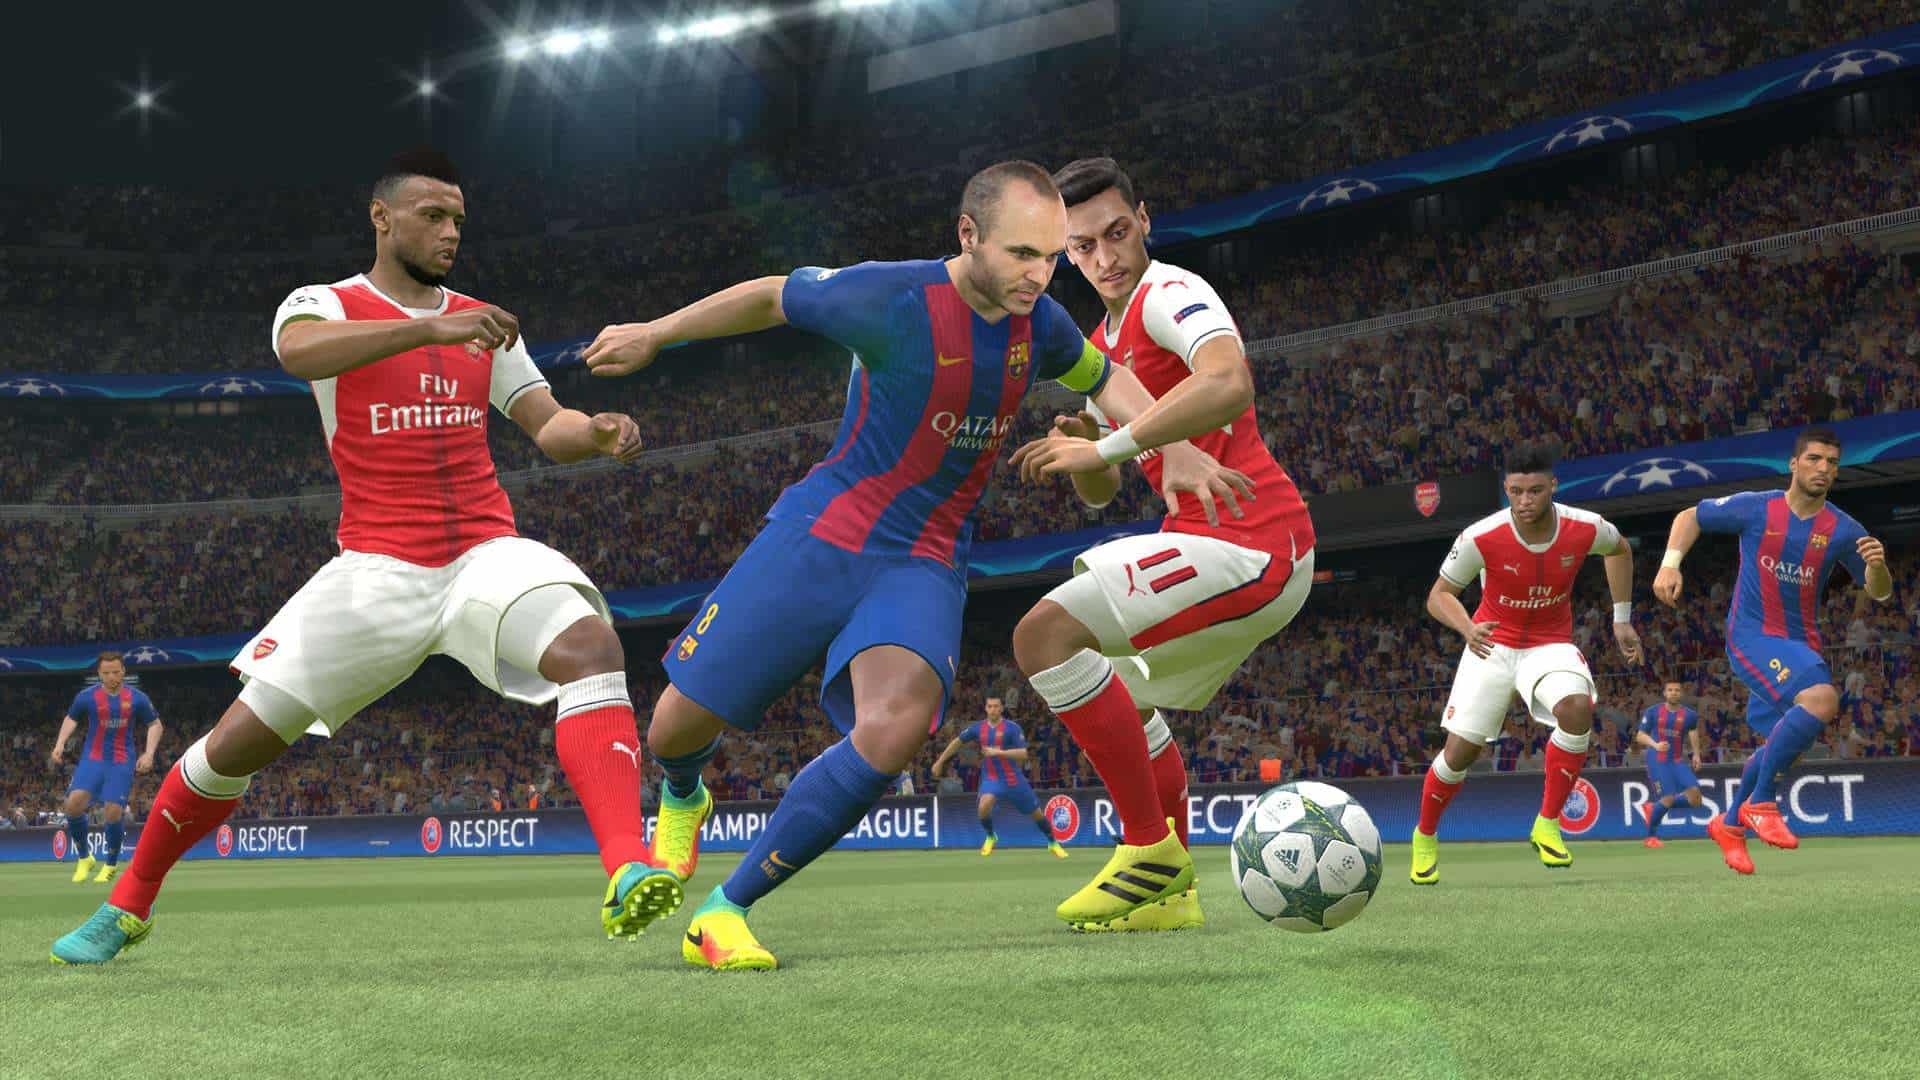 Pro Evolution Soccer 2017 PC game download full version free